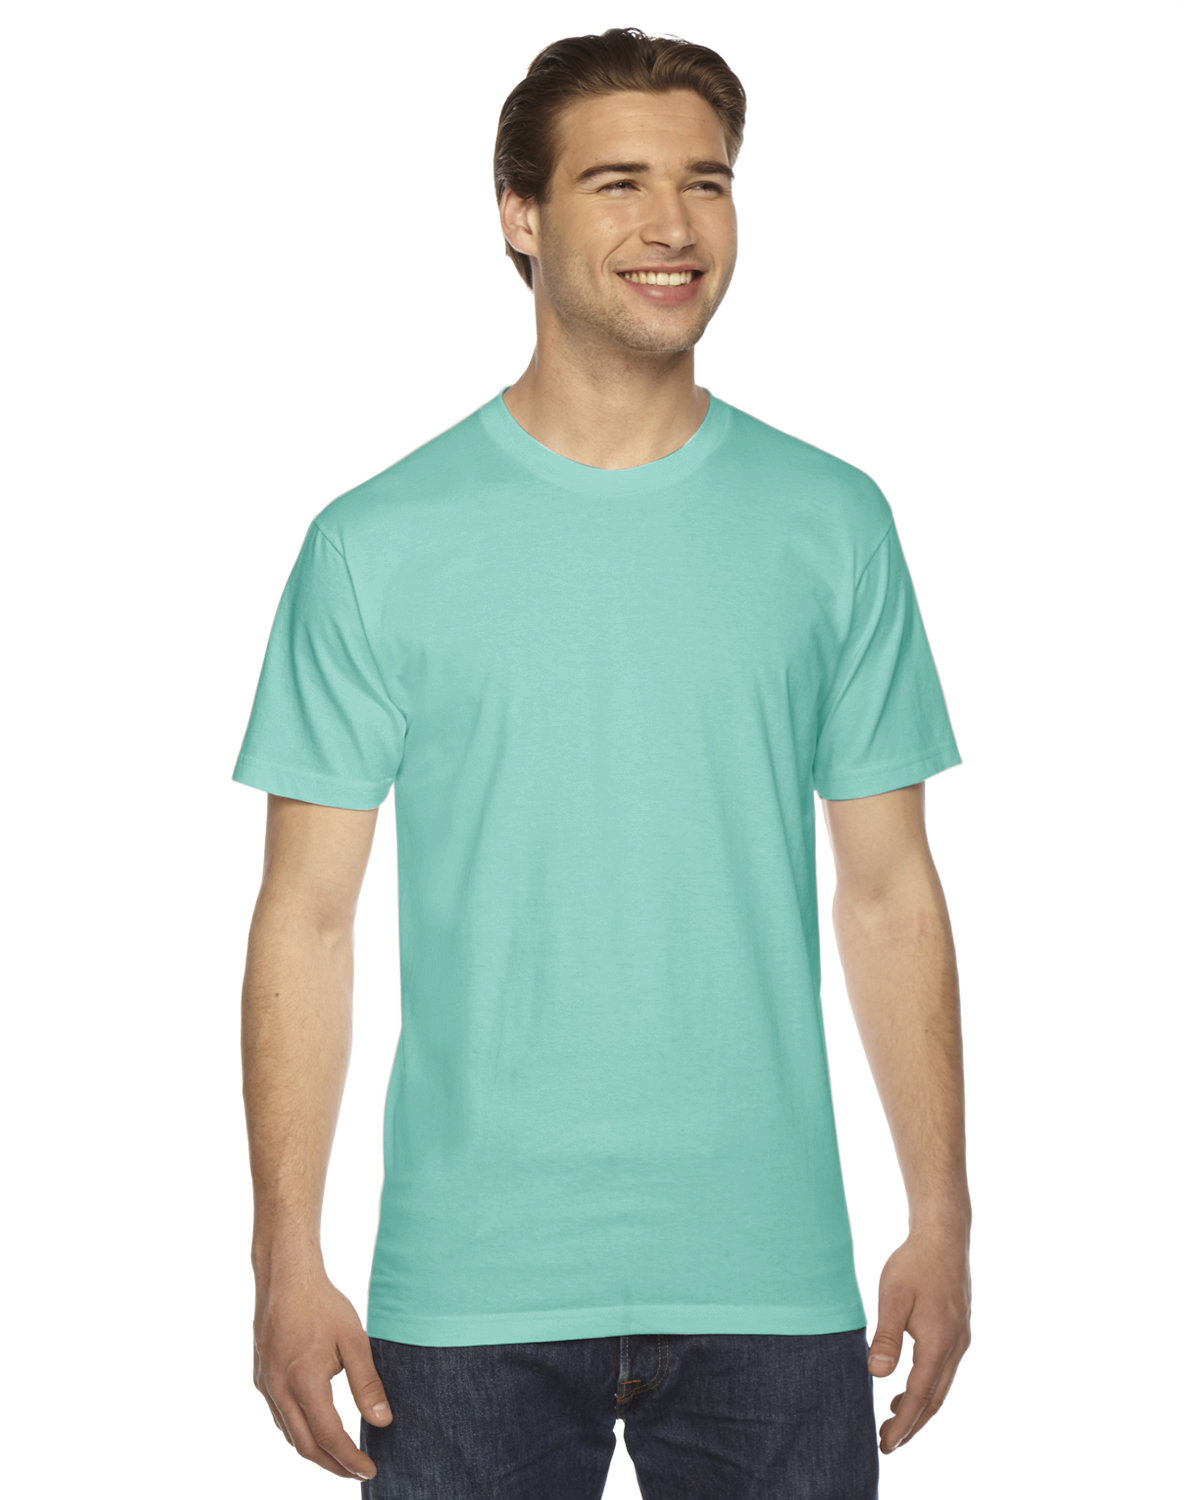 American Apparel Unisex Fine Jersey Short-Sleeve T-Shirt MINT 